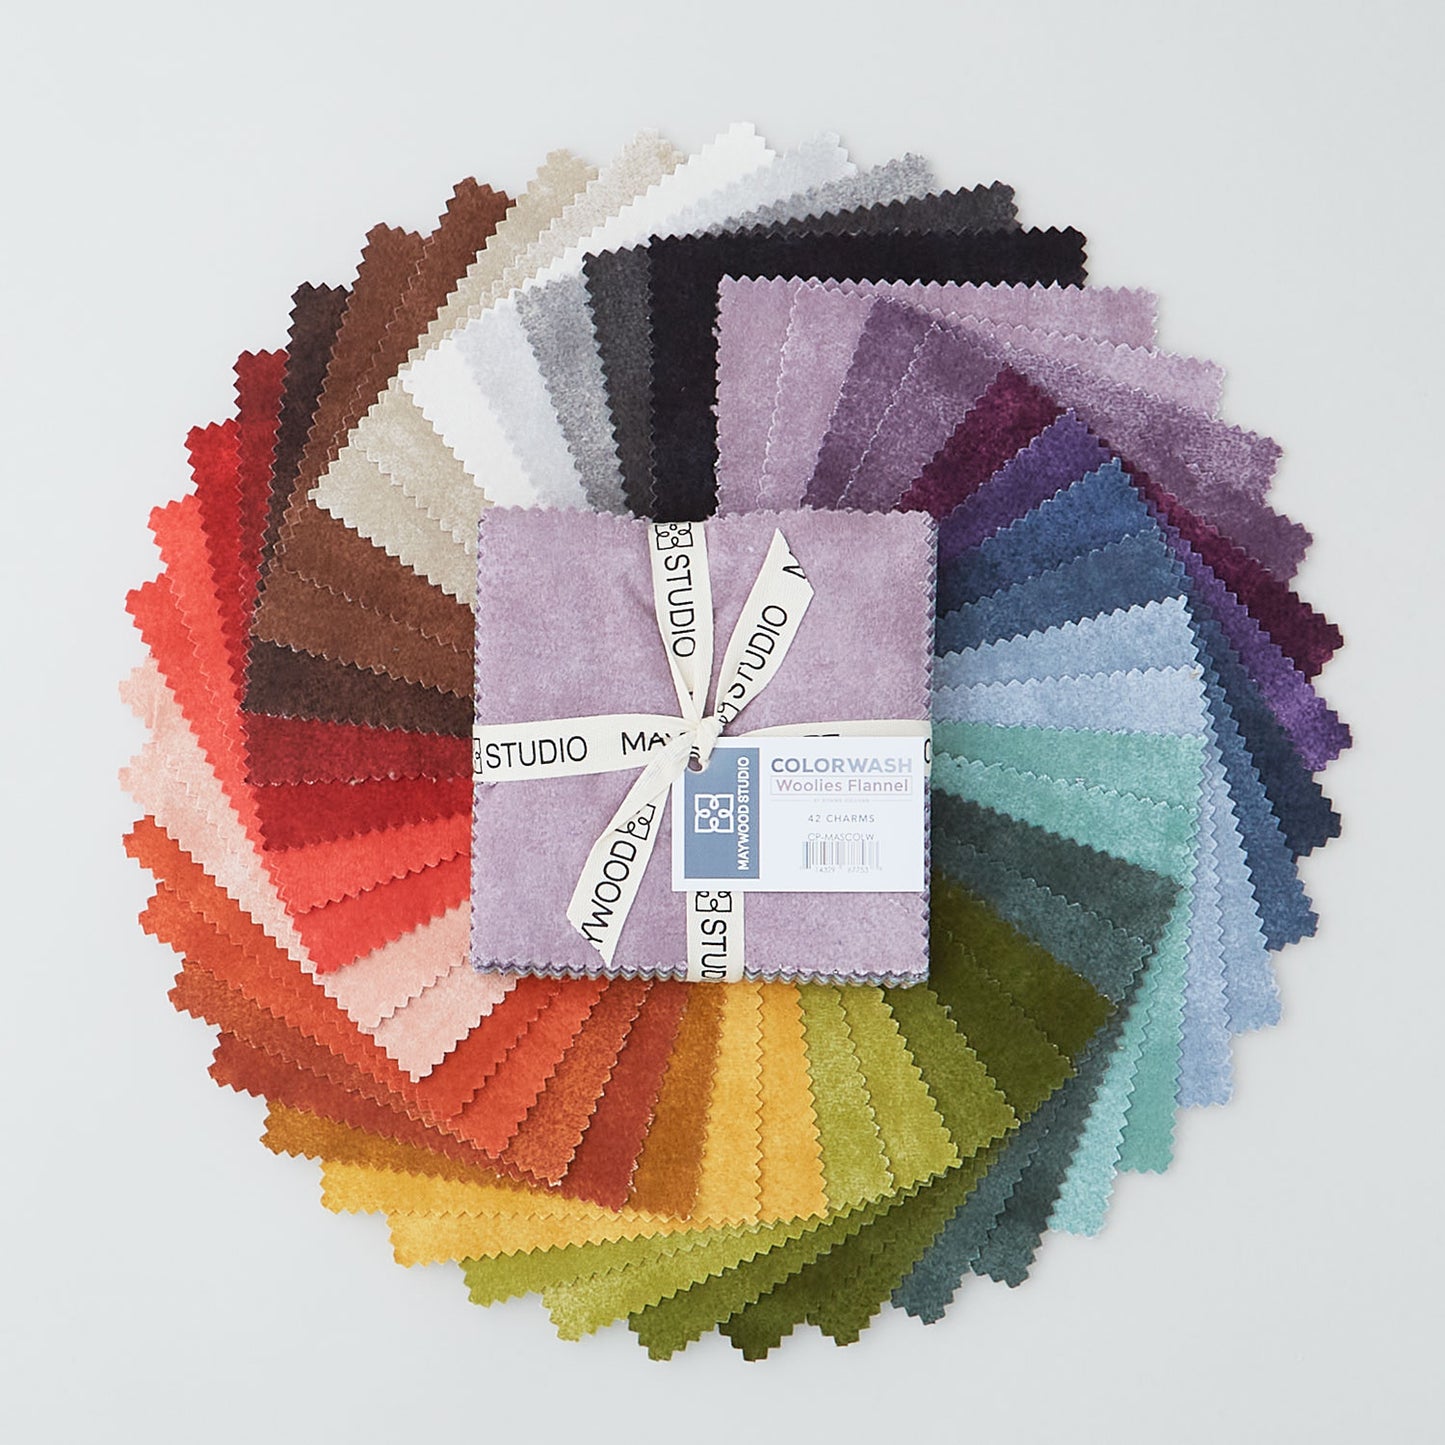 Woolies Flannel - Colorwash Charm Pack Primary Image